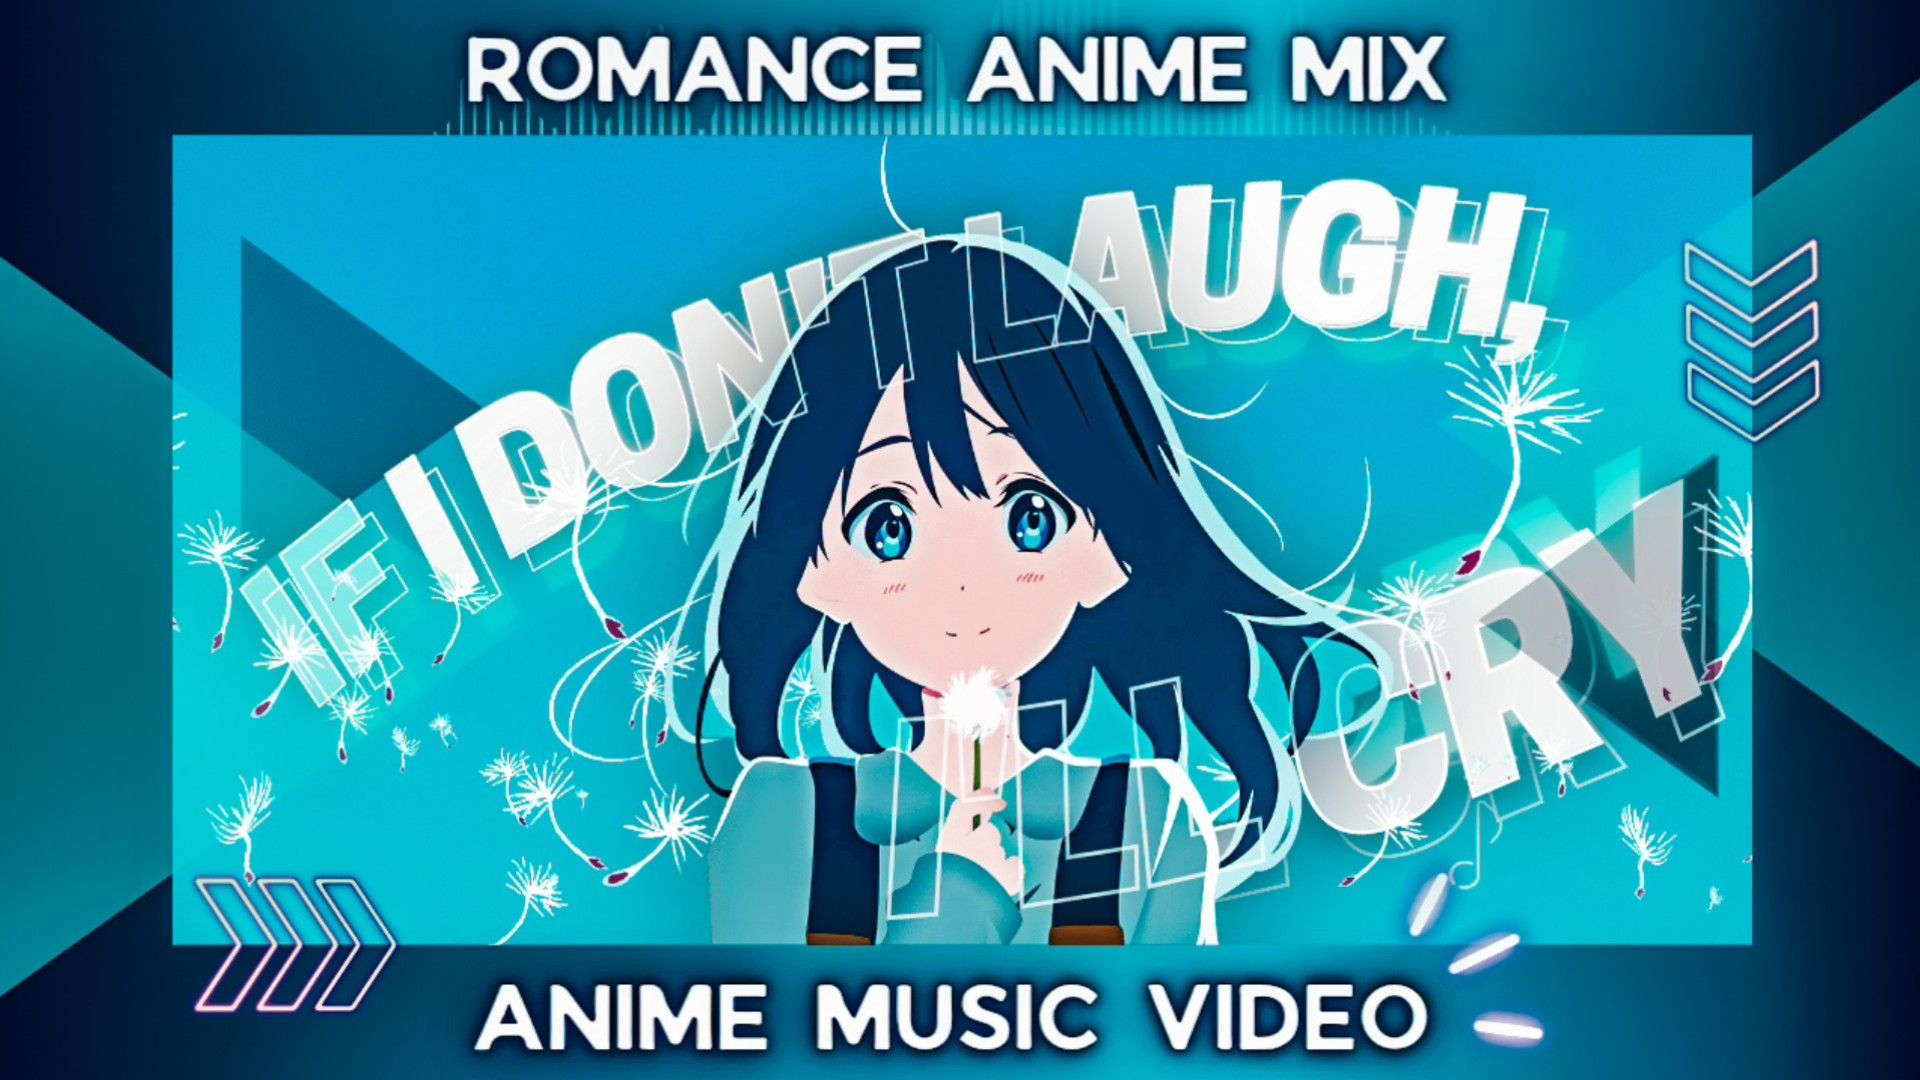 8tracks radio  The best romance anime 22 songs  free and music playlist